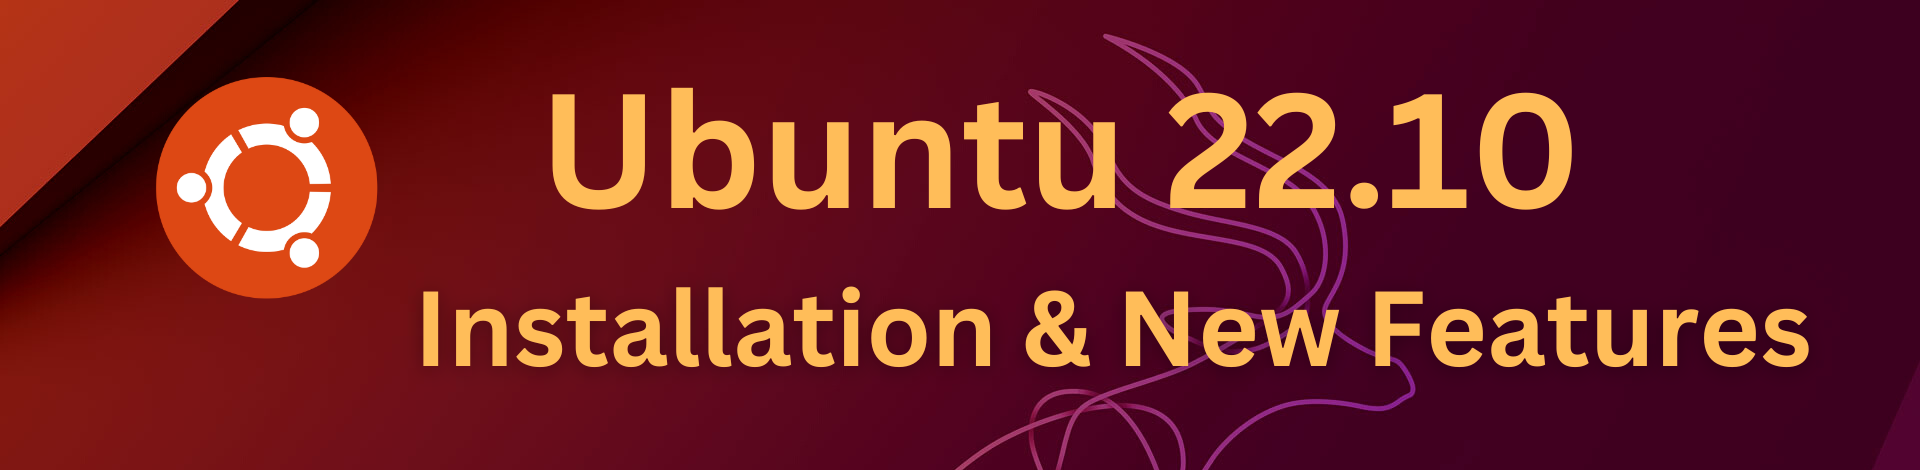 Ubuntu 22.10 Installation & Features